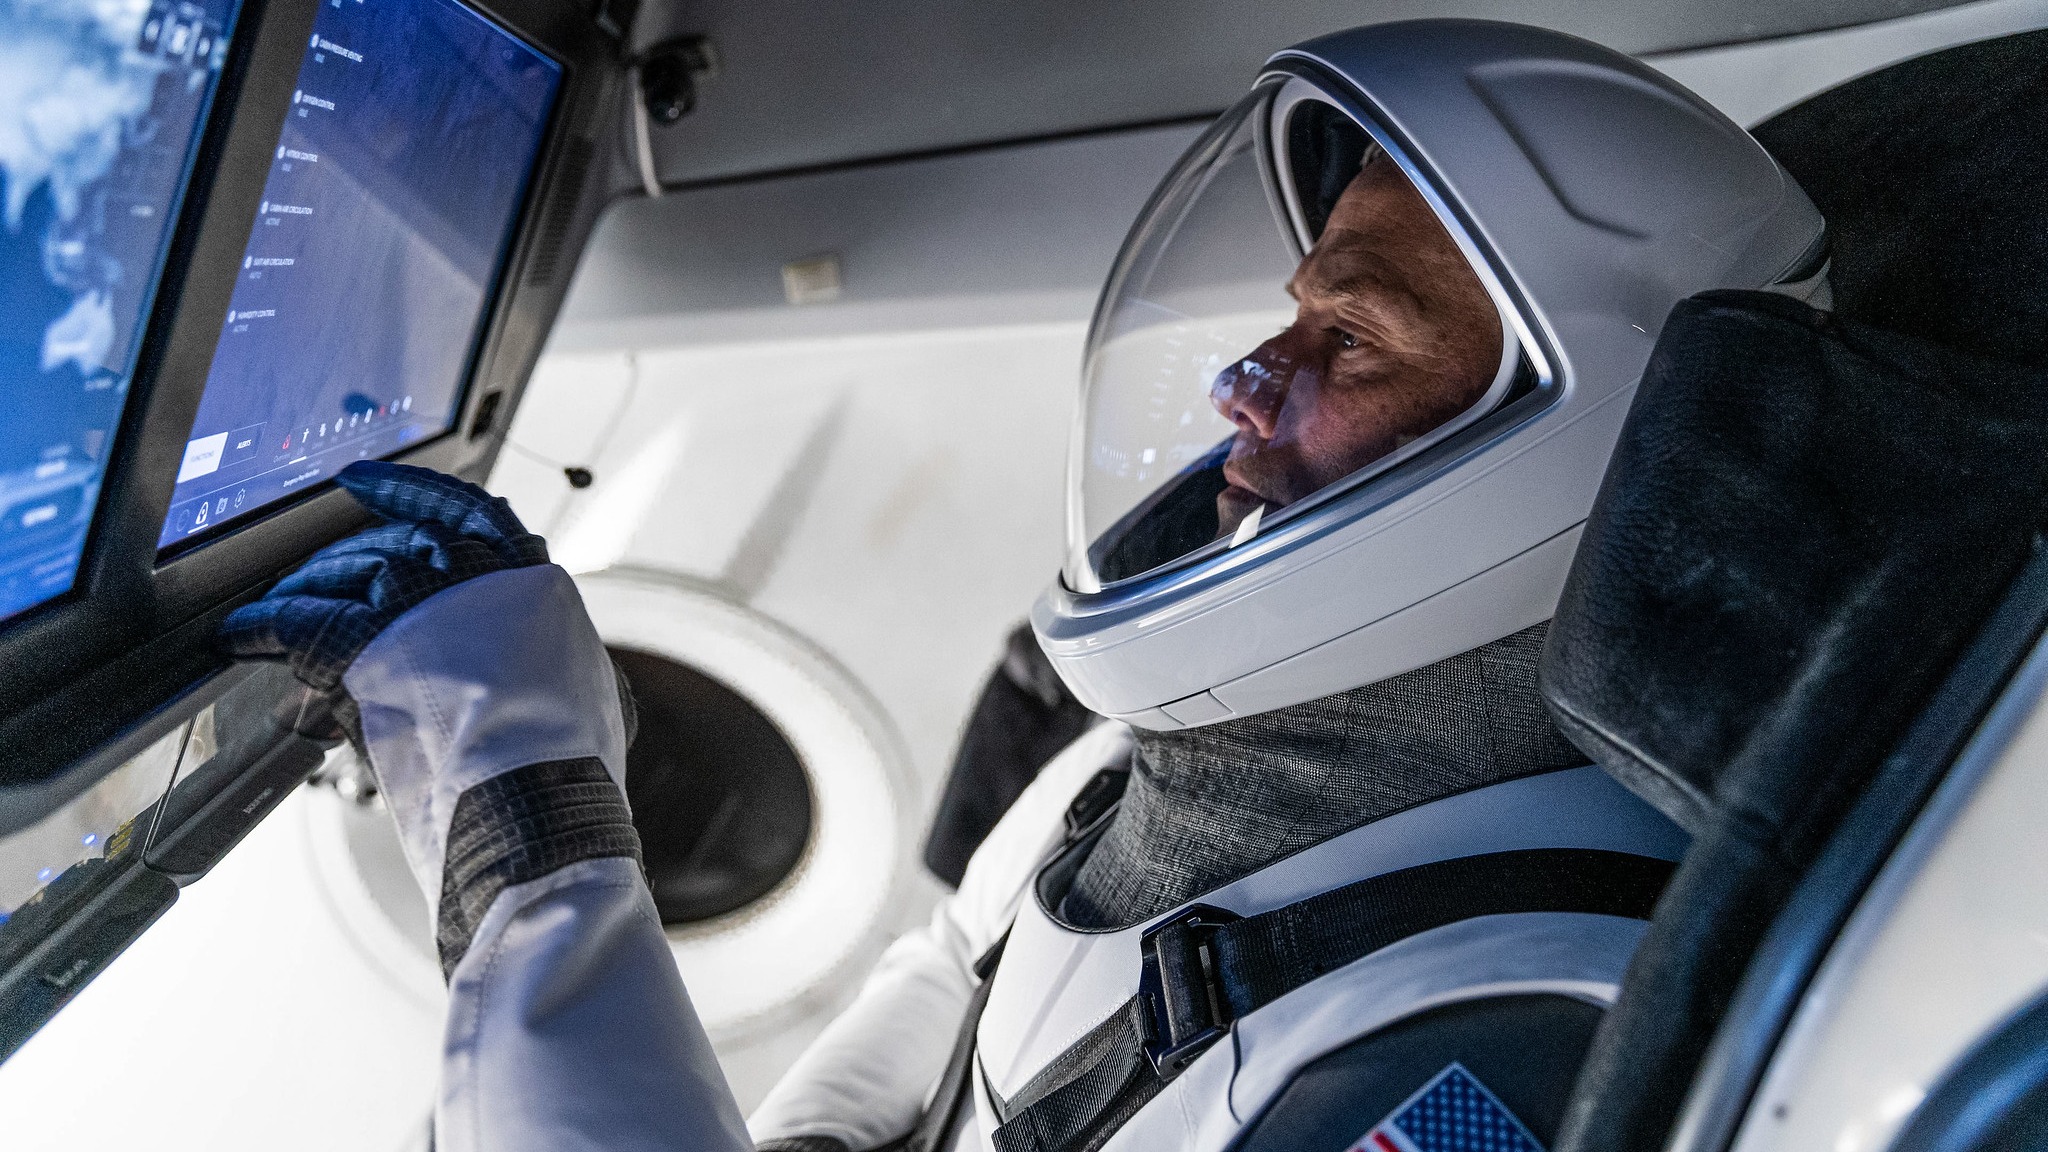  Veteran astronaut Tom Marshburn retires from NASA 